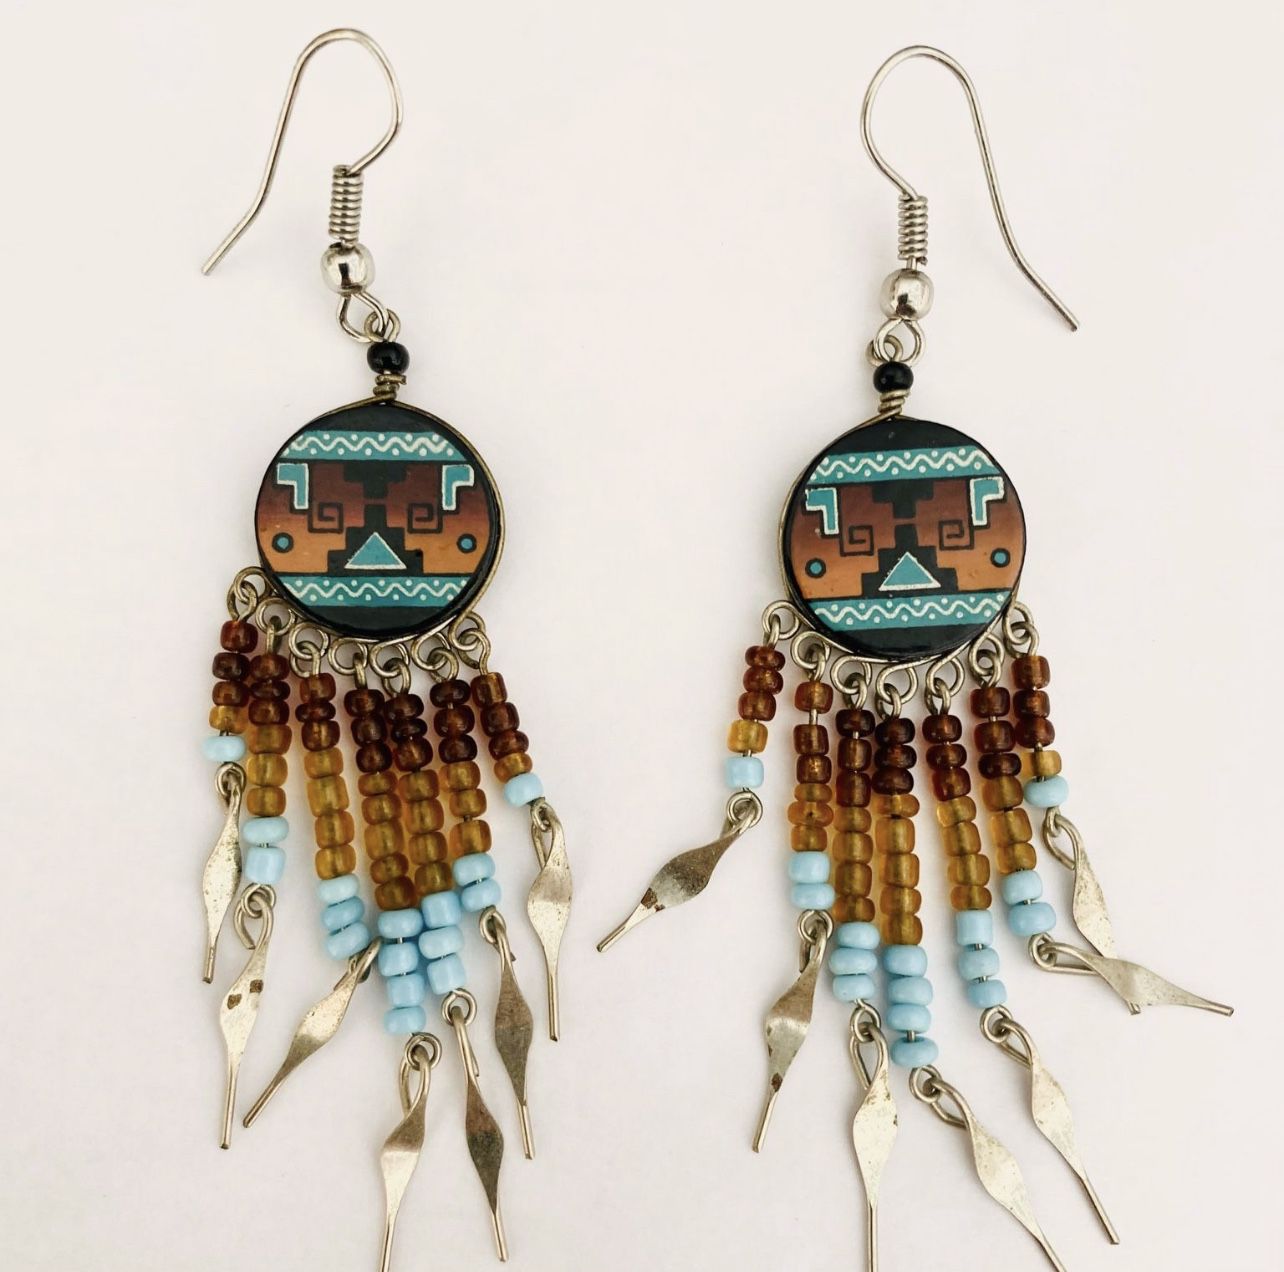 Matoska Beaded Earrings - Beaded Jewelry - Native American Earrings - Native American Jewelry - Indigenous Earrings - Indigenous Jewelry